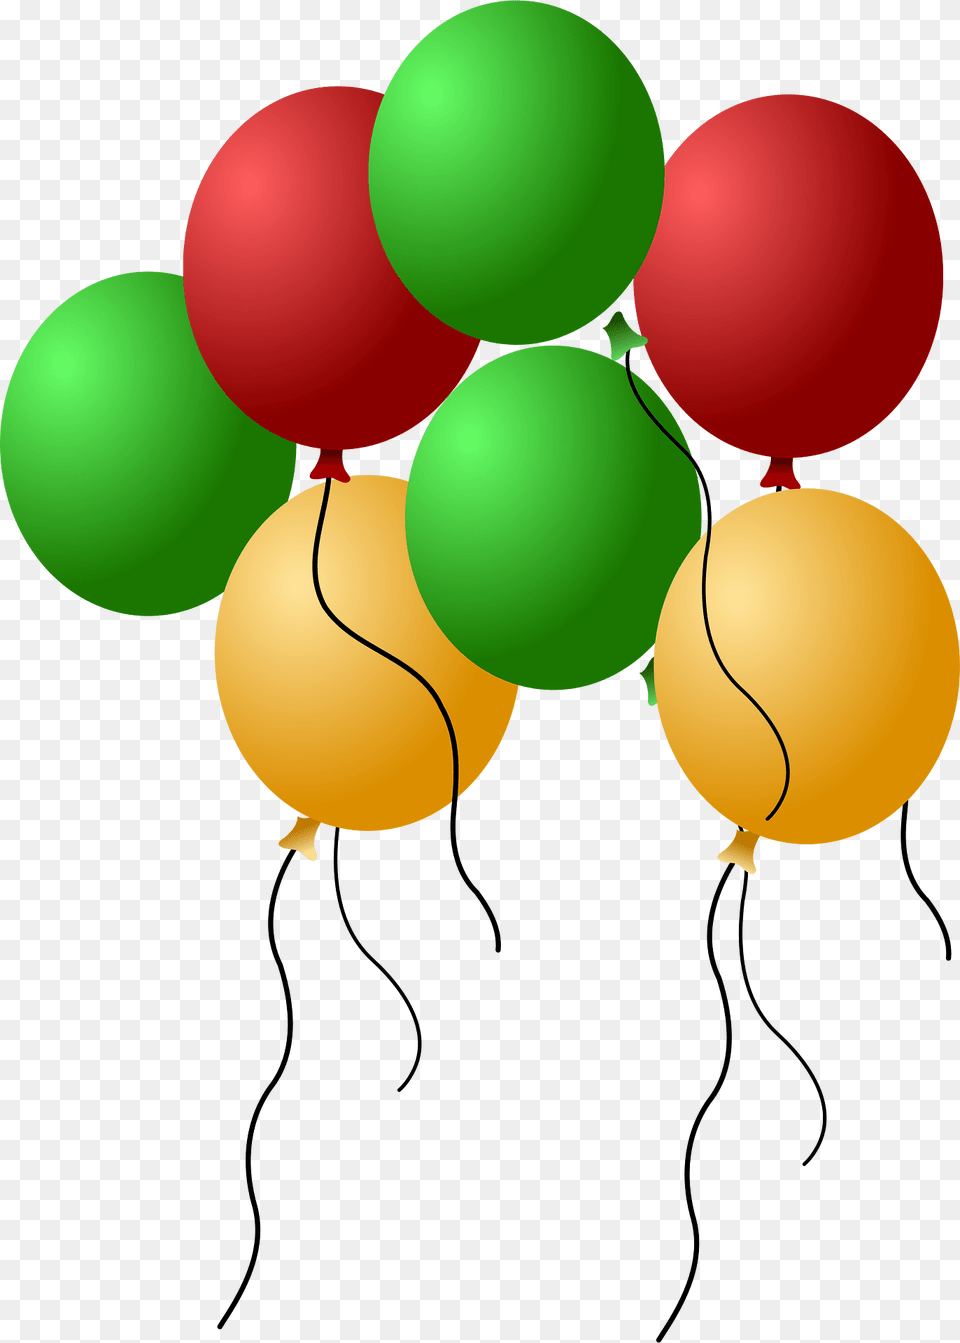 Balloons Clipart, Balloon Png Image